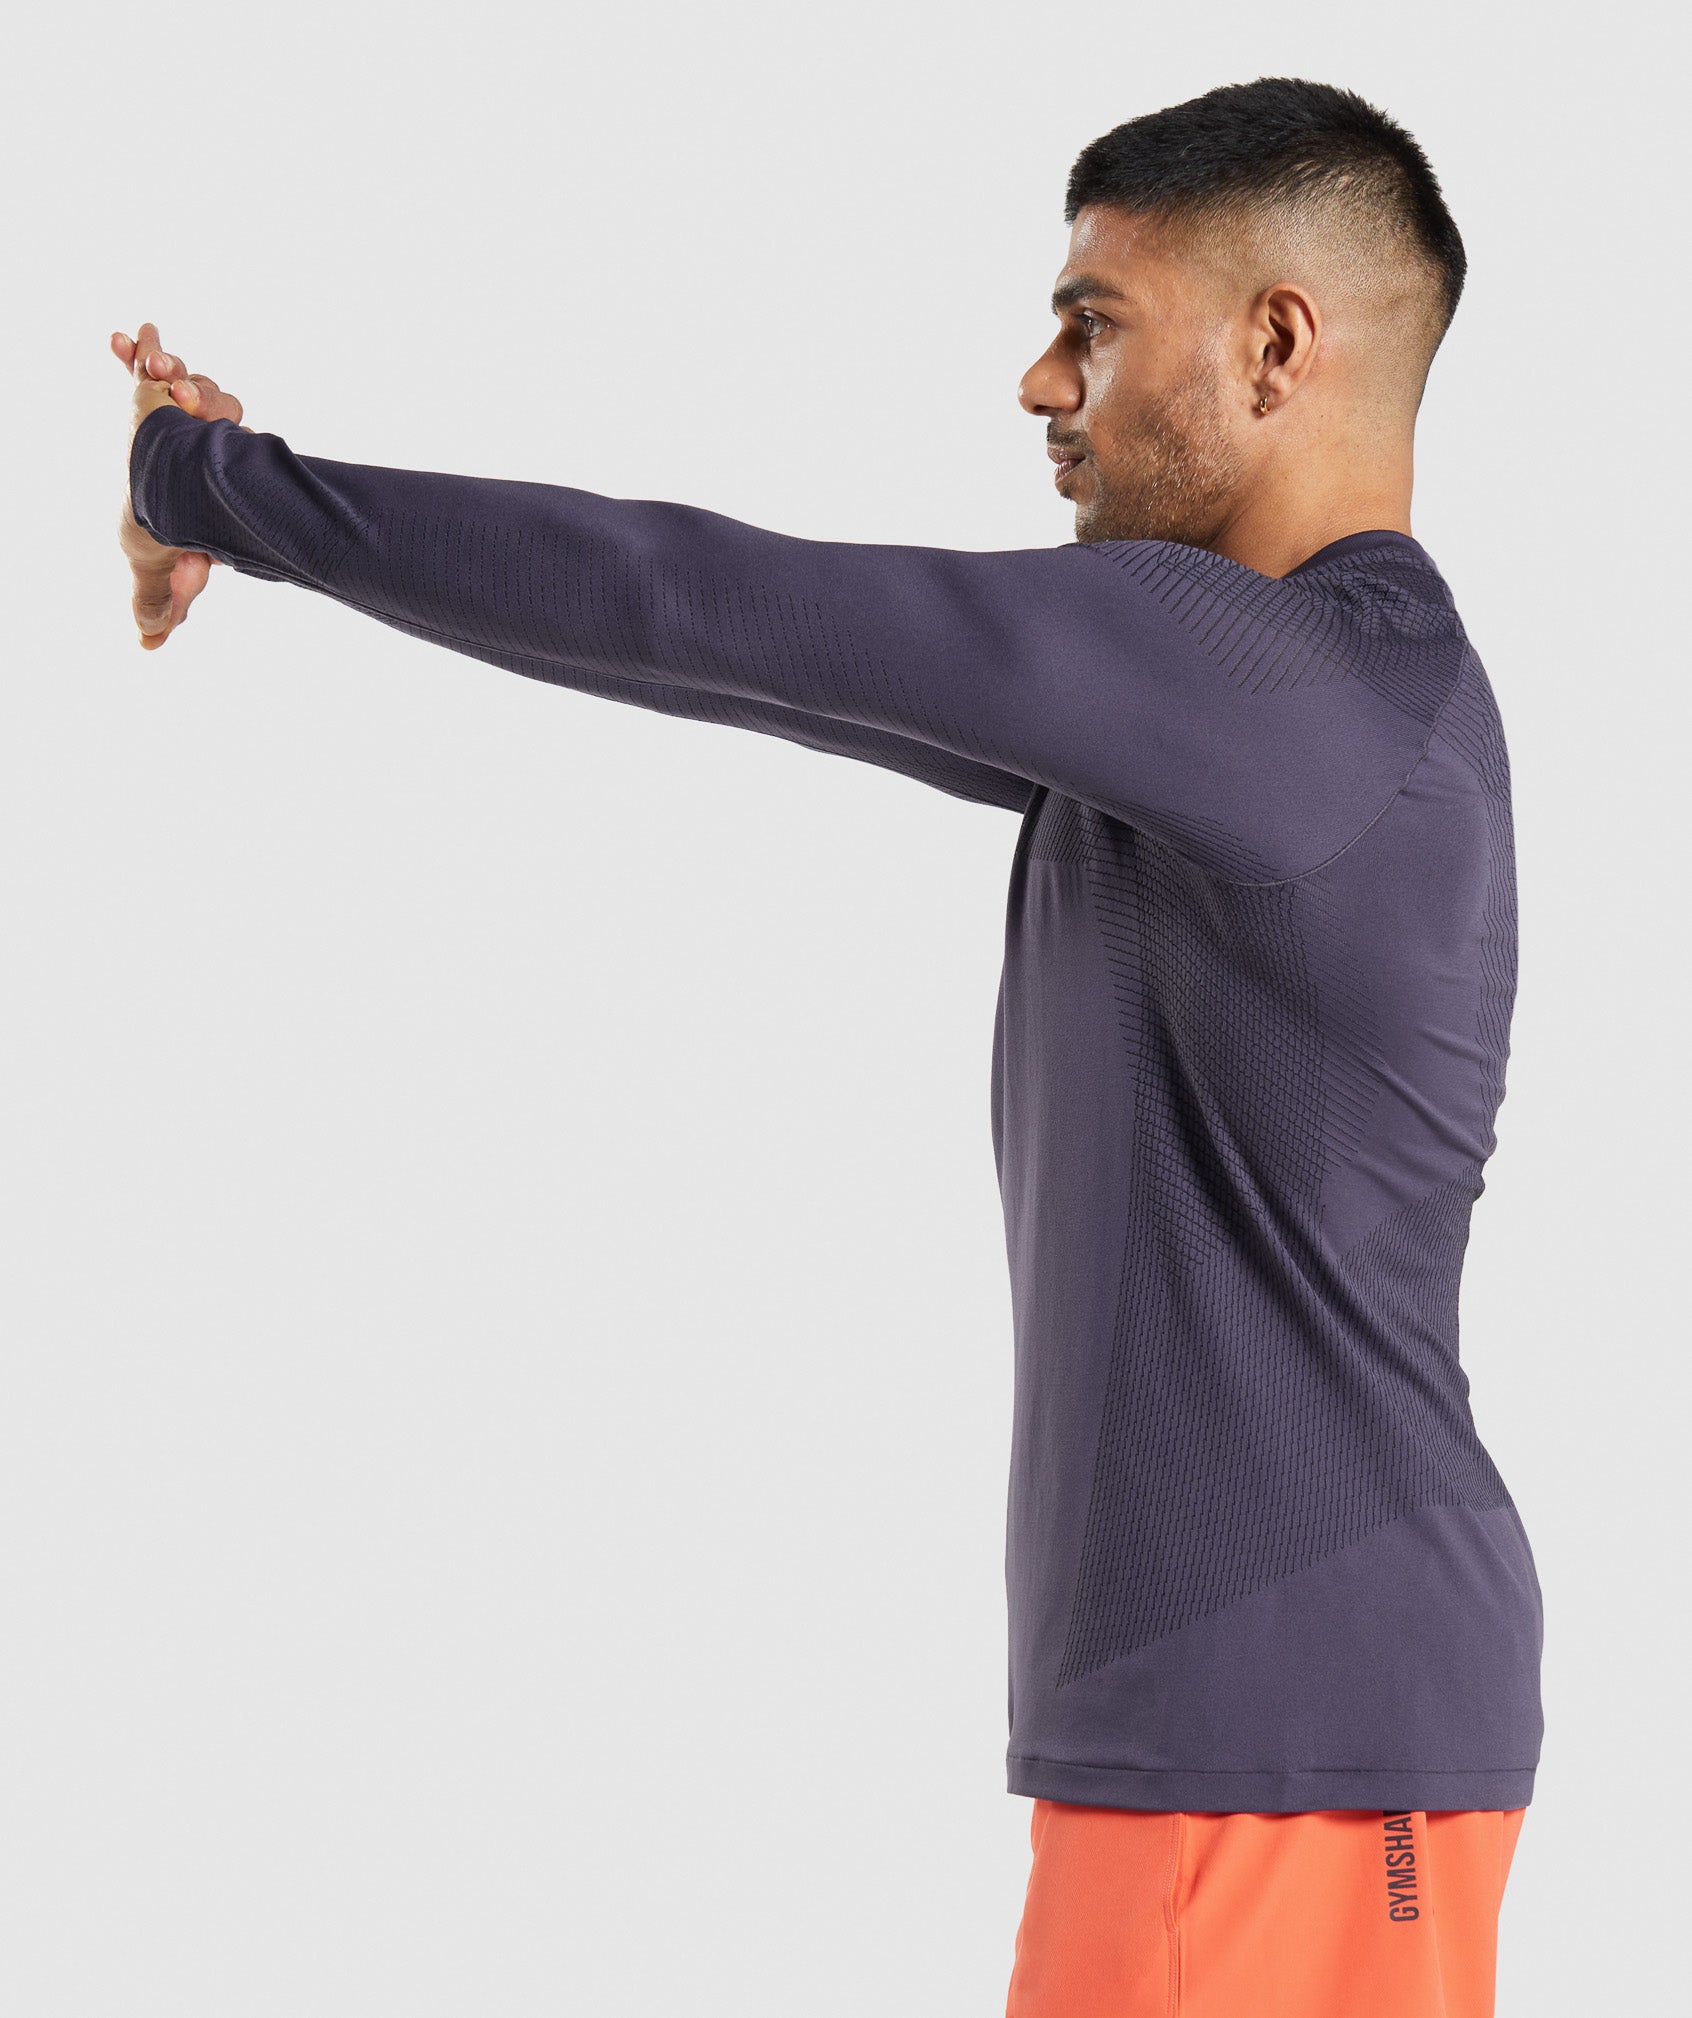 Apex Seamless Long Sleeve T-Shirt in Rich Purple/Black - view 3